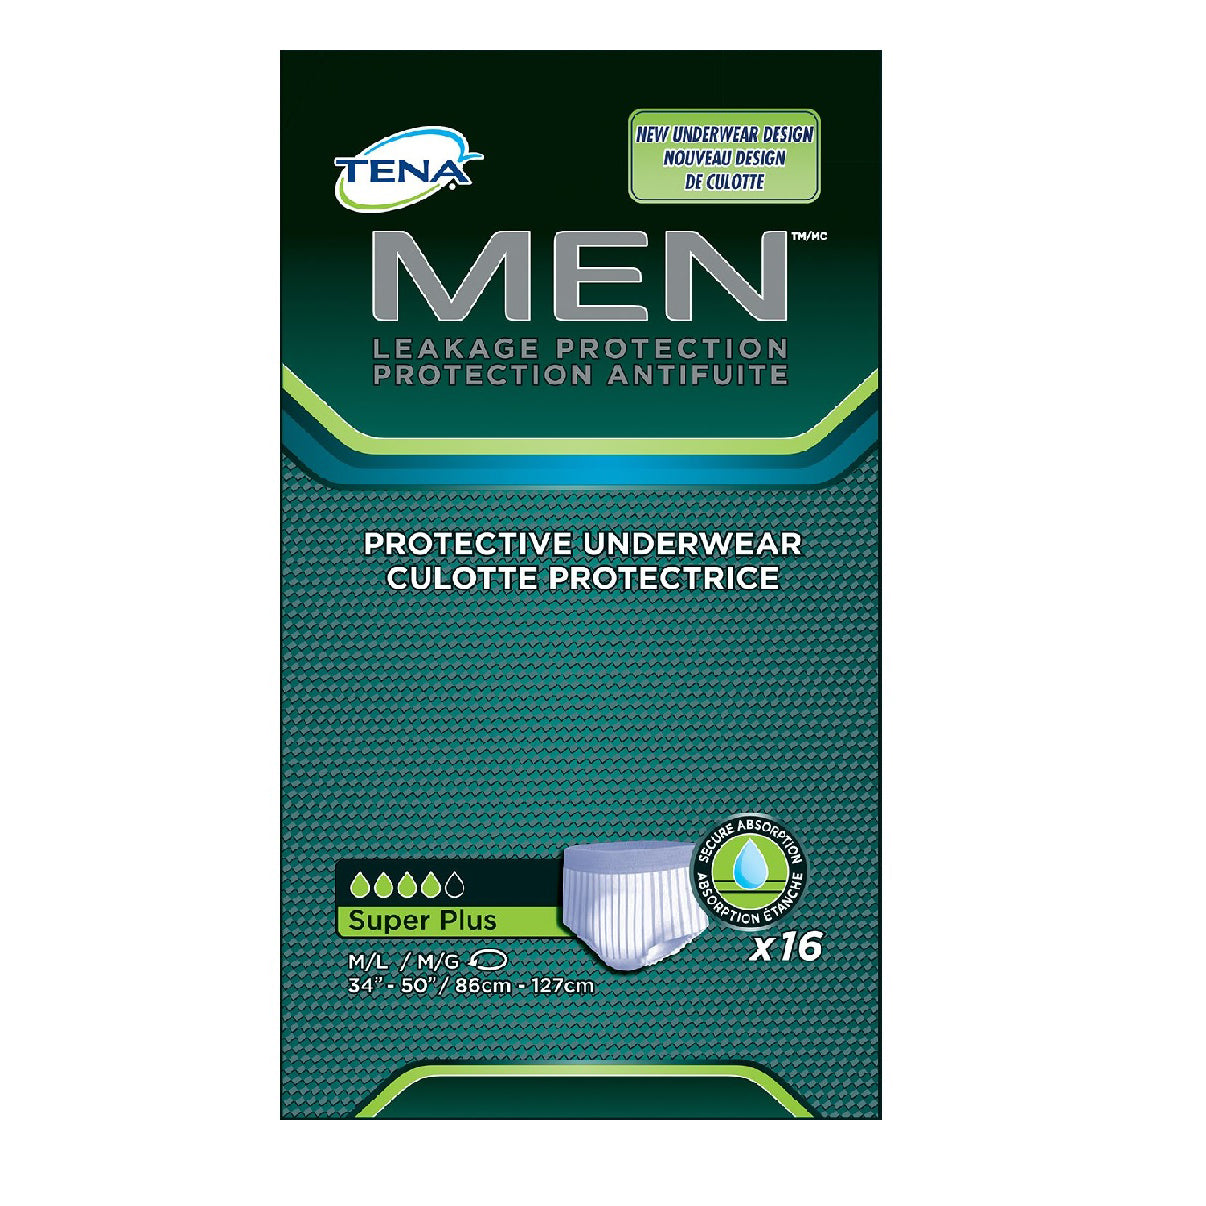 Tena Absorbent Protector For Men Level 3 16 Units